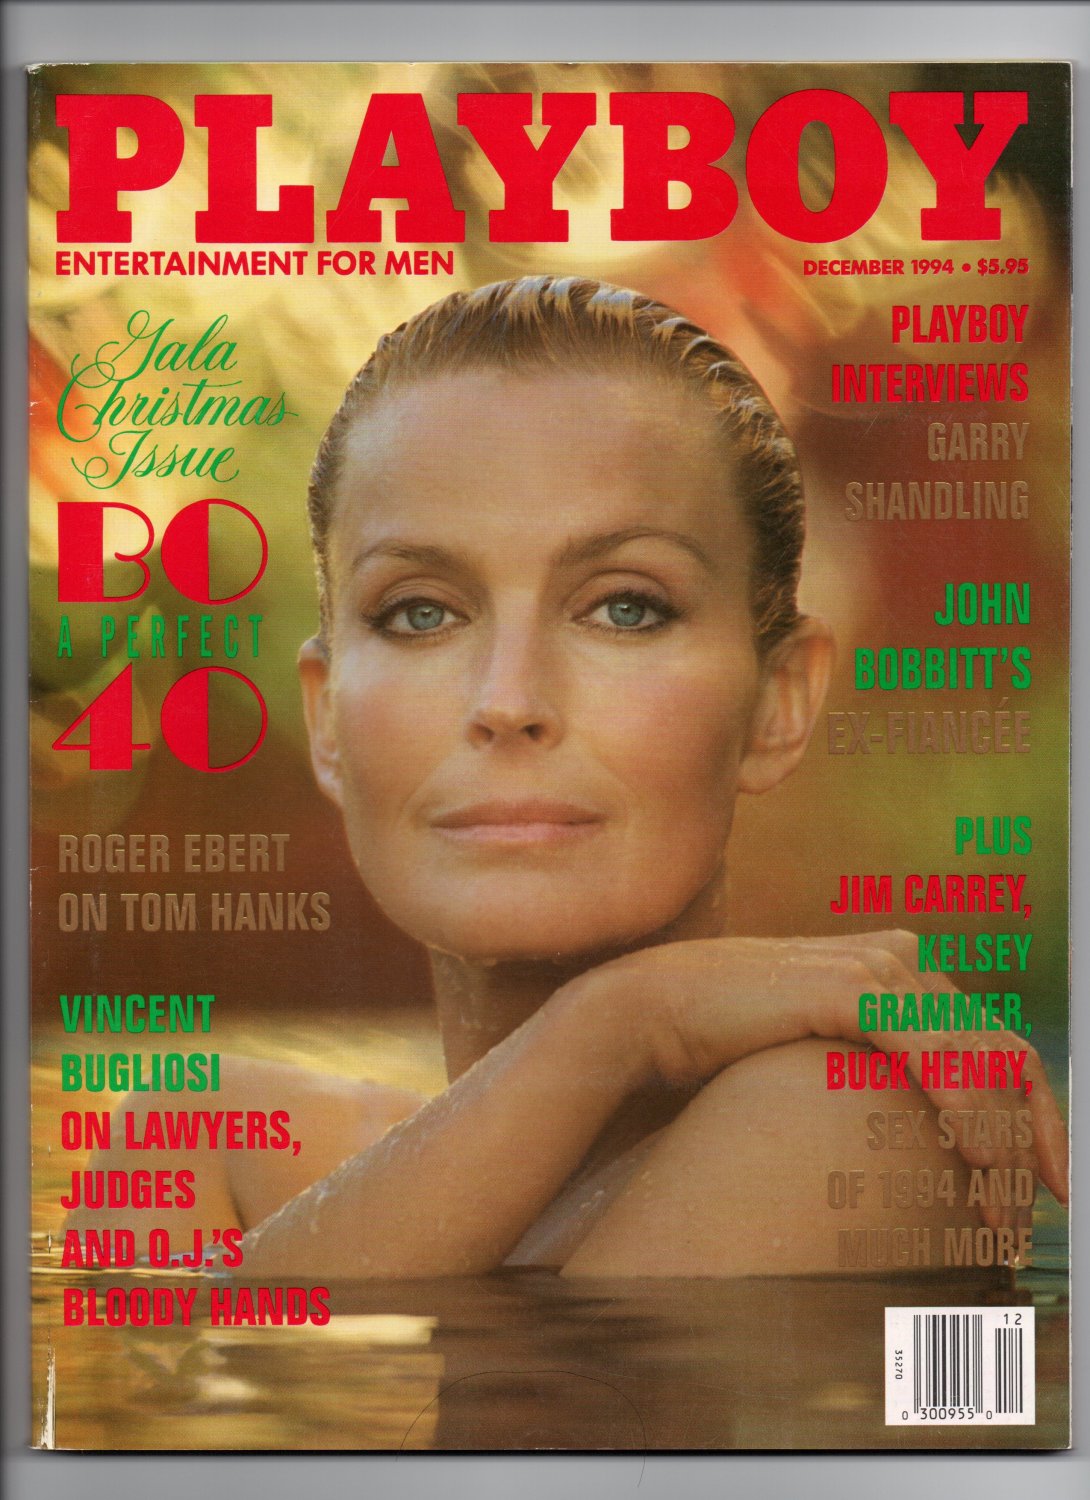 oldmags.com - Playboy December 1994 - Product Details